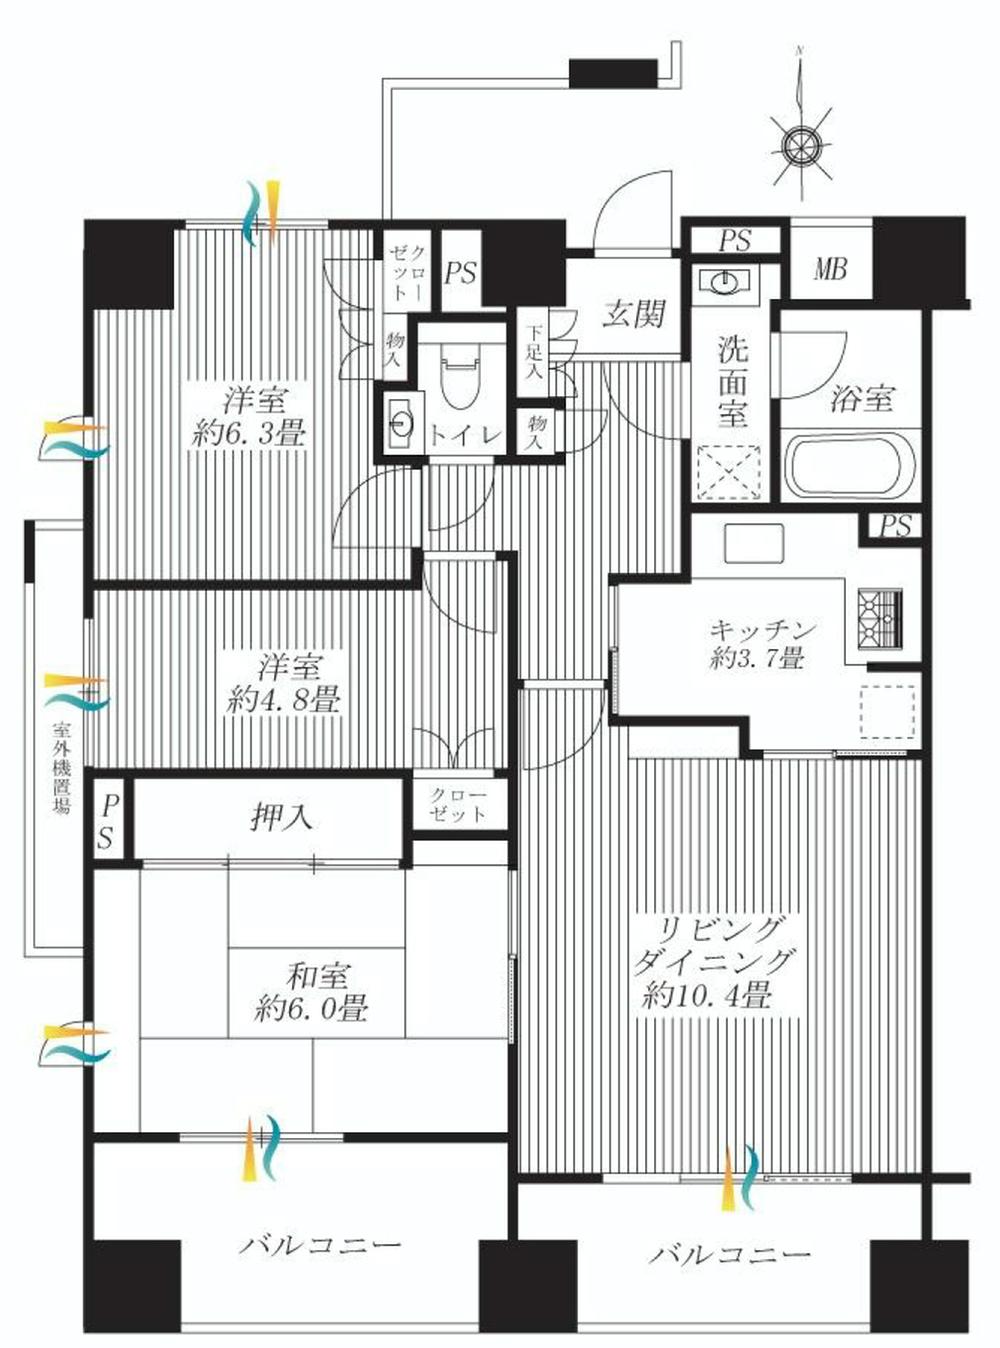 Floor plan. 3LDK, Price 37,800,000 yen, Occupied area 73.78 sq m , Balcony area 10.68 sq m